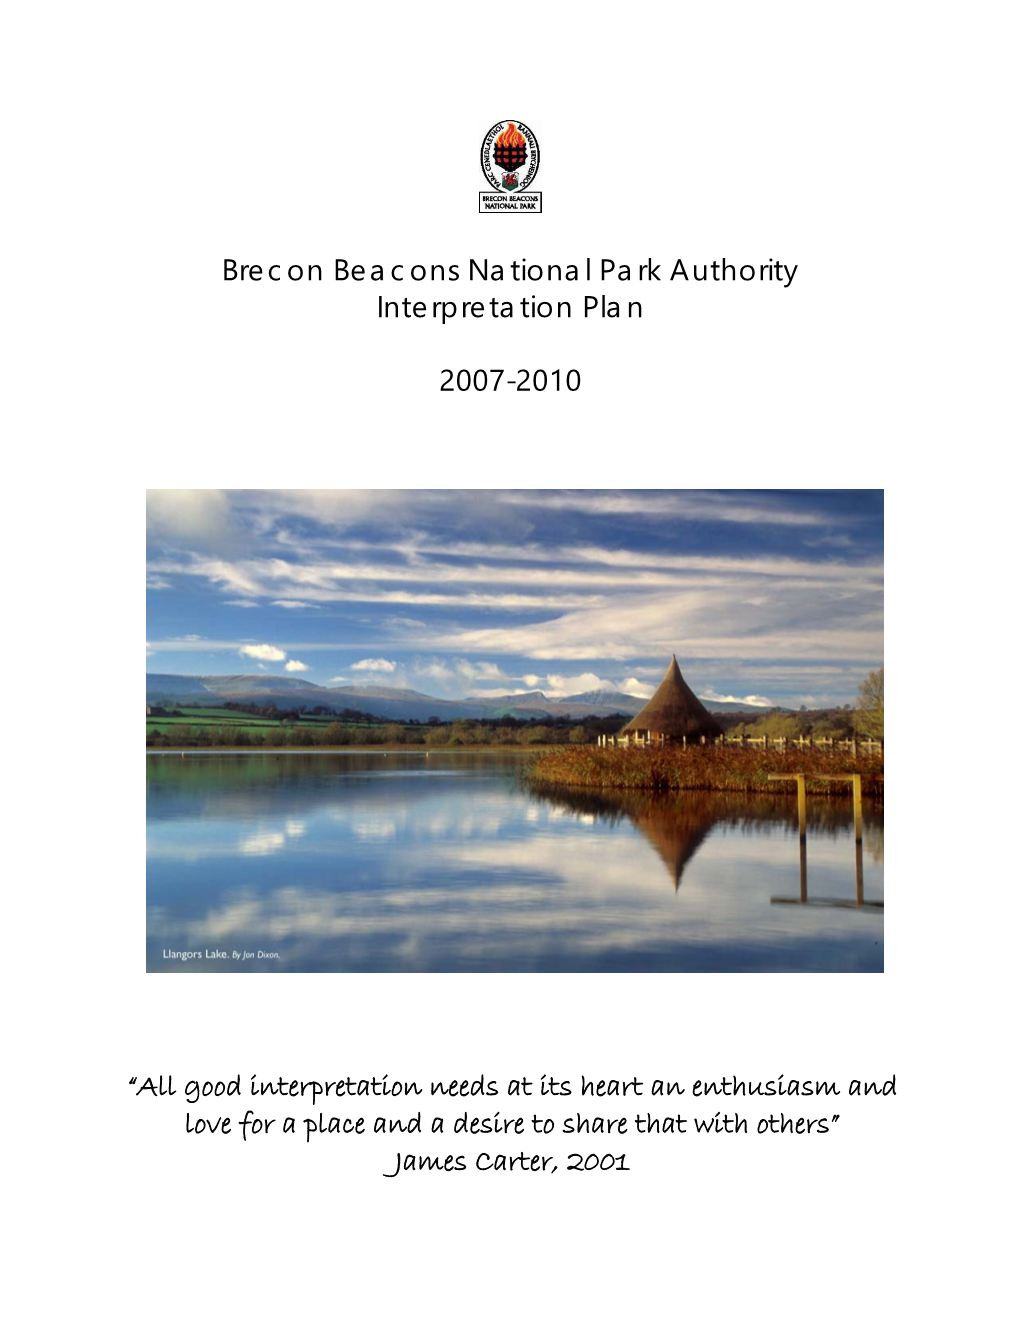 Brecon Beacons National Park Authority Interpretation Plan 2007